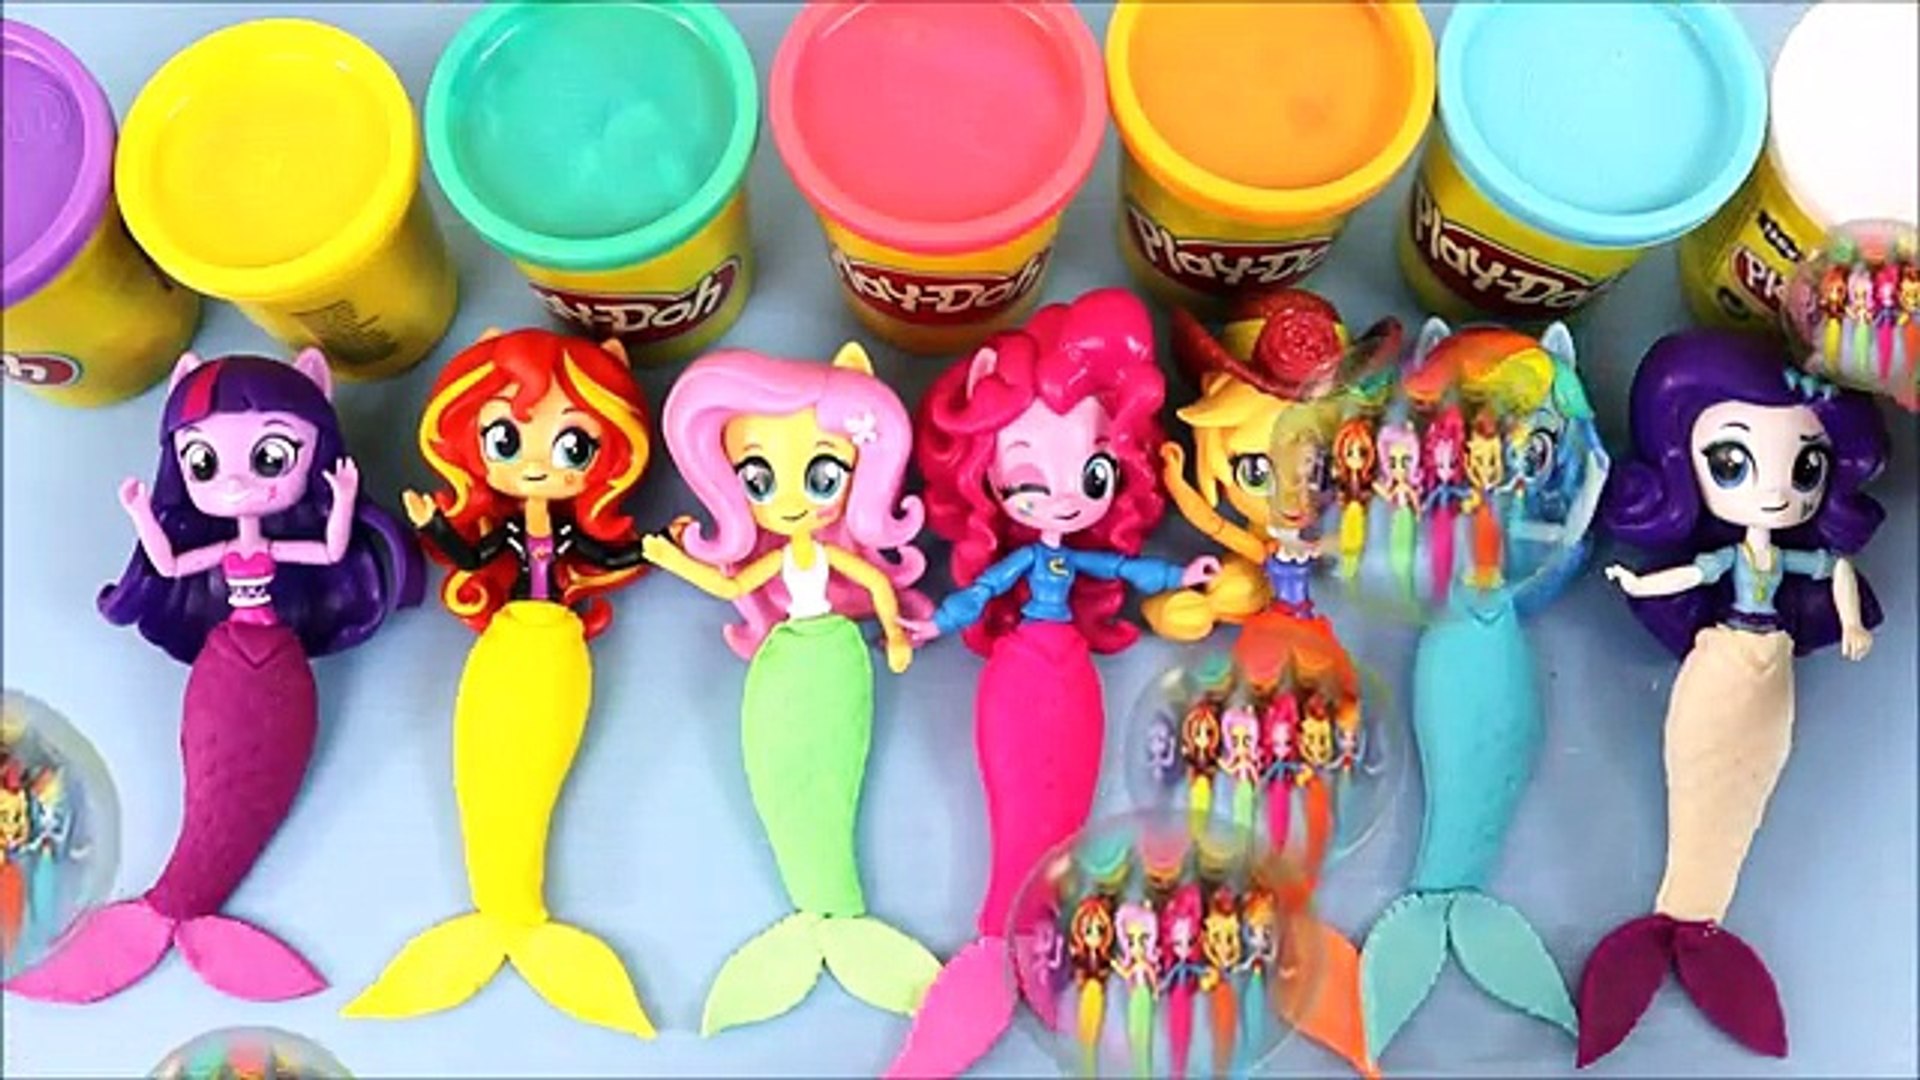 MLP Equestria Girls Play-doh Mermaids! My Little Pony Toys Surprise Video,  Best Kids Playdoh Videos – Видео Dailymotion